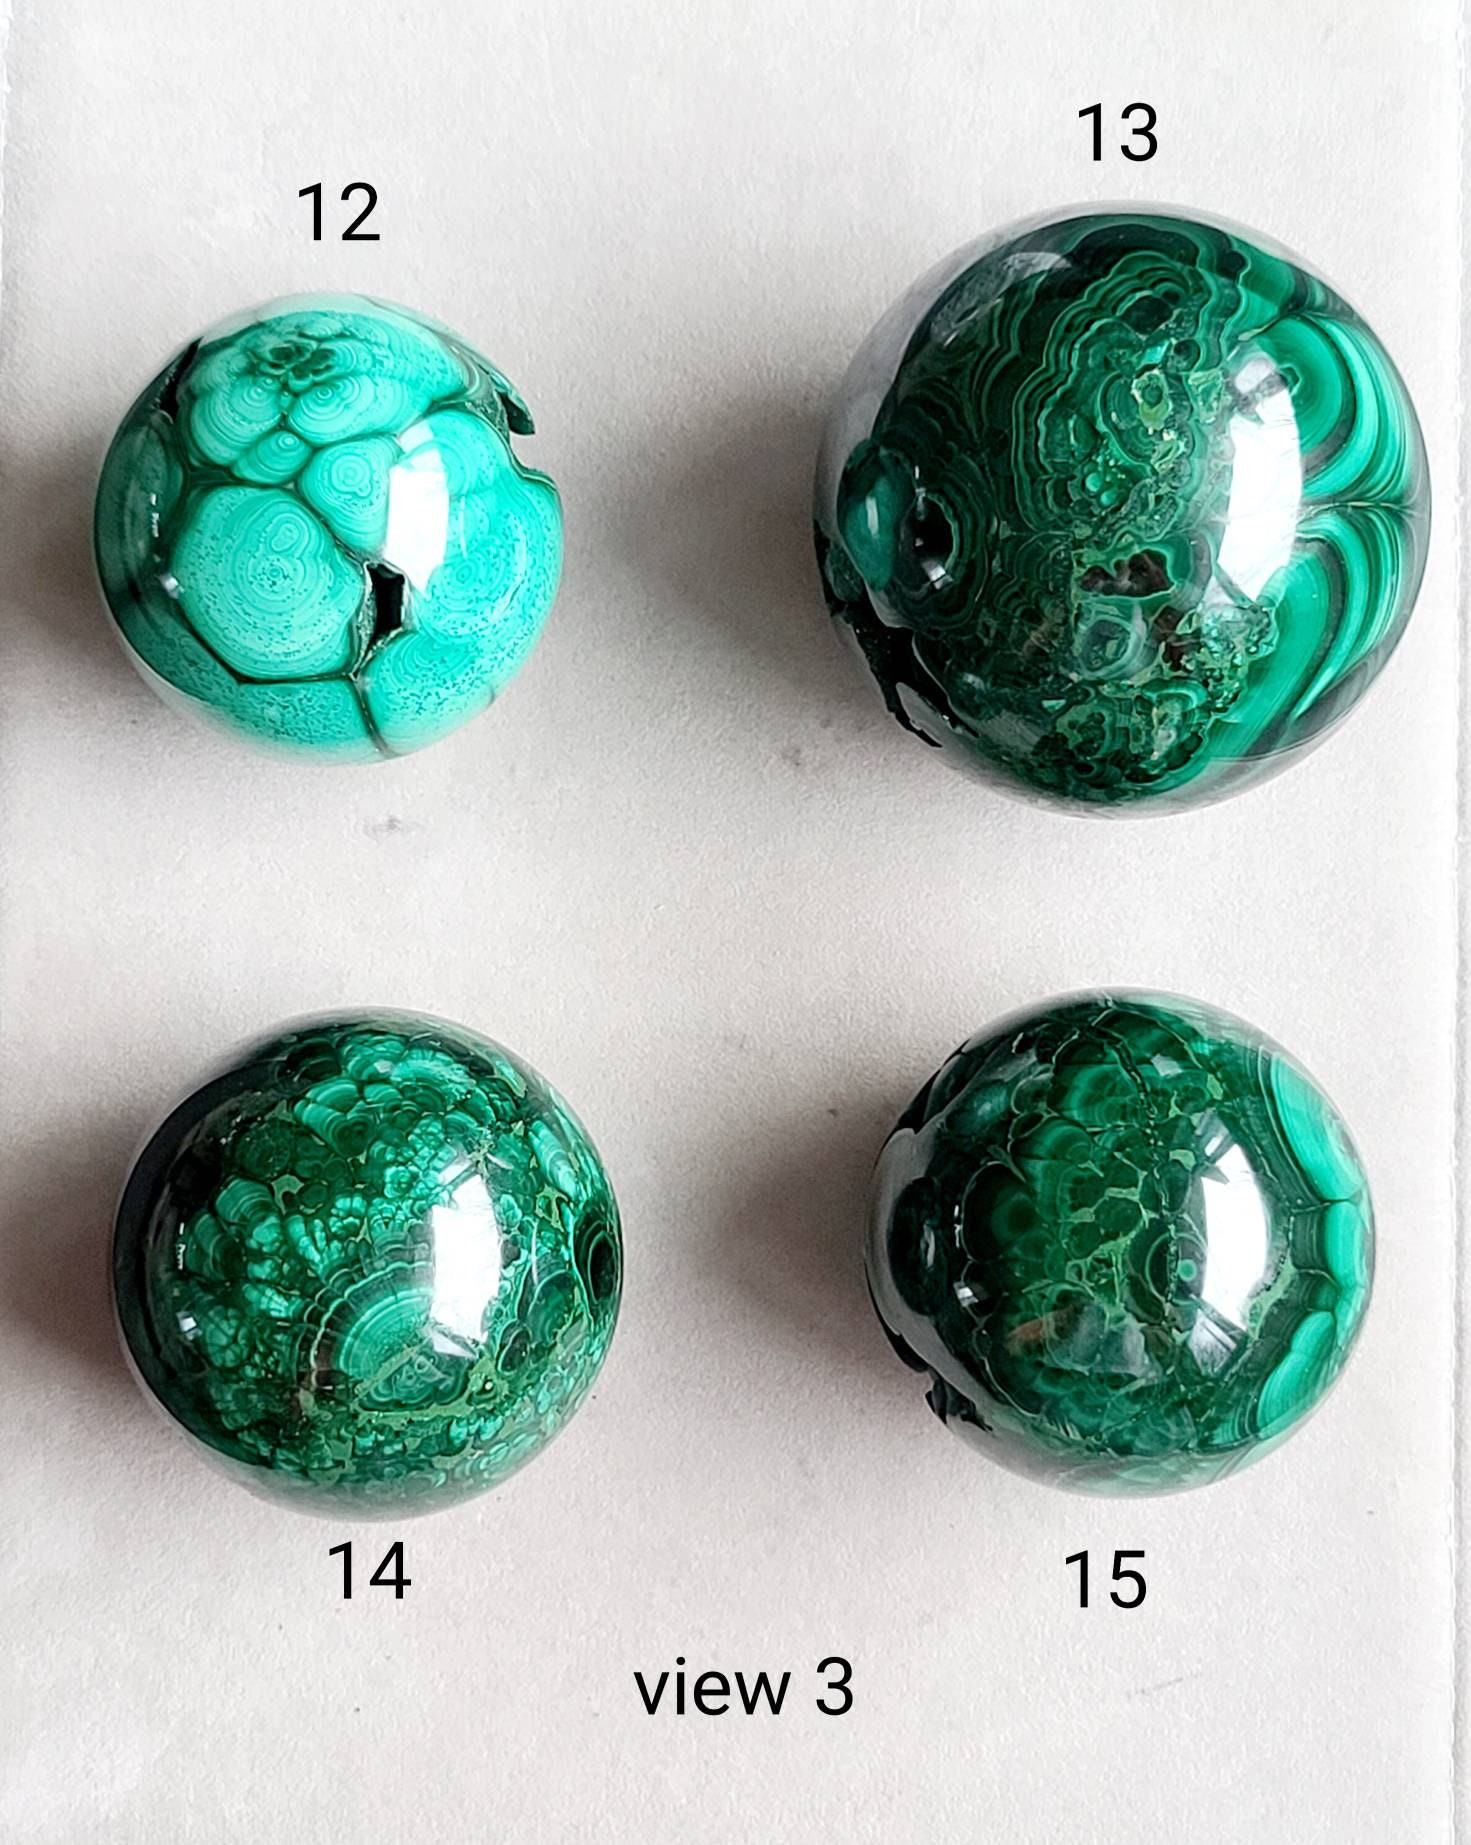 The Healing Properties & Symbolic Meaning of Beads – Meraki Sphere